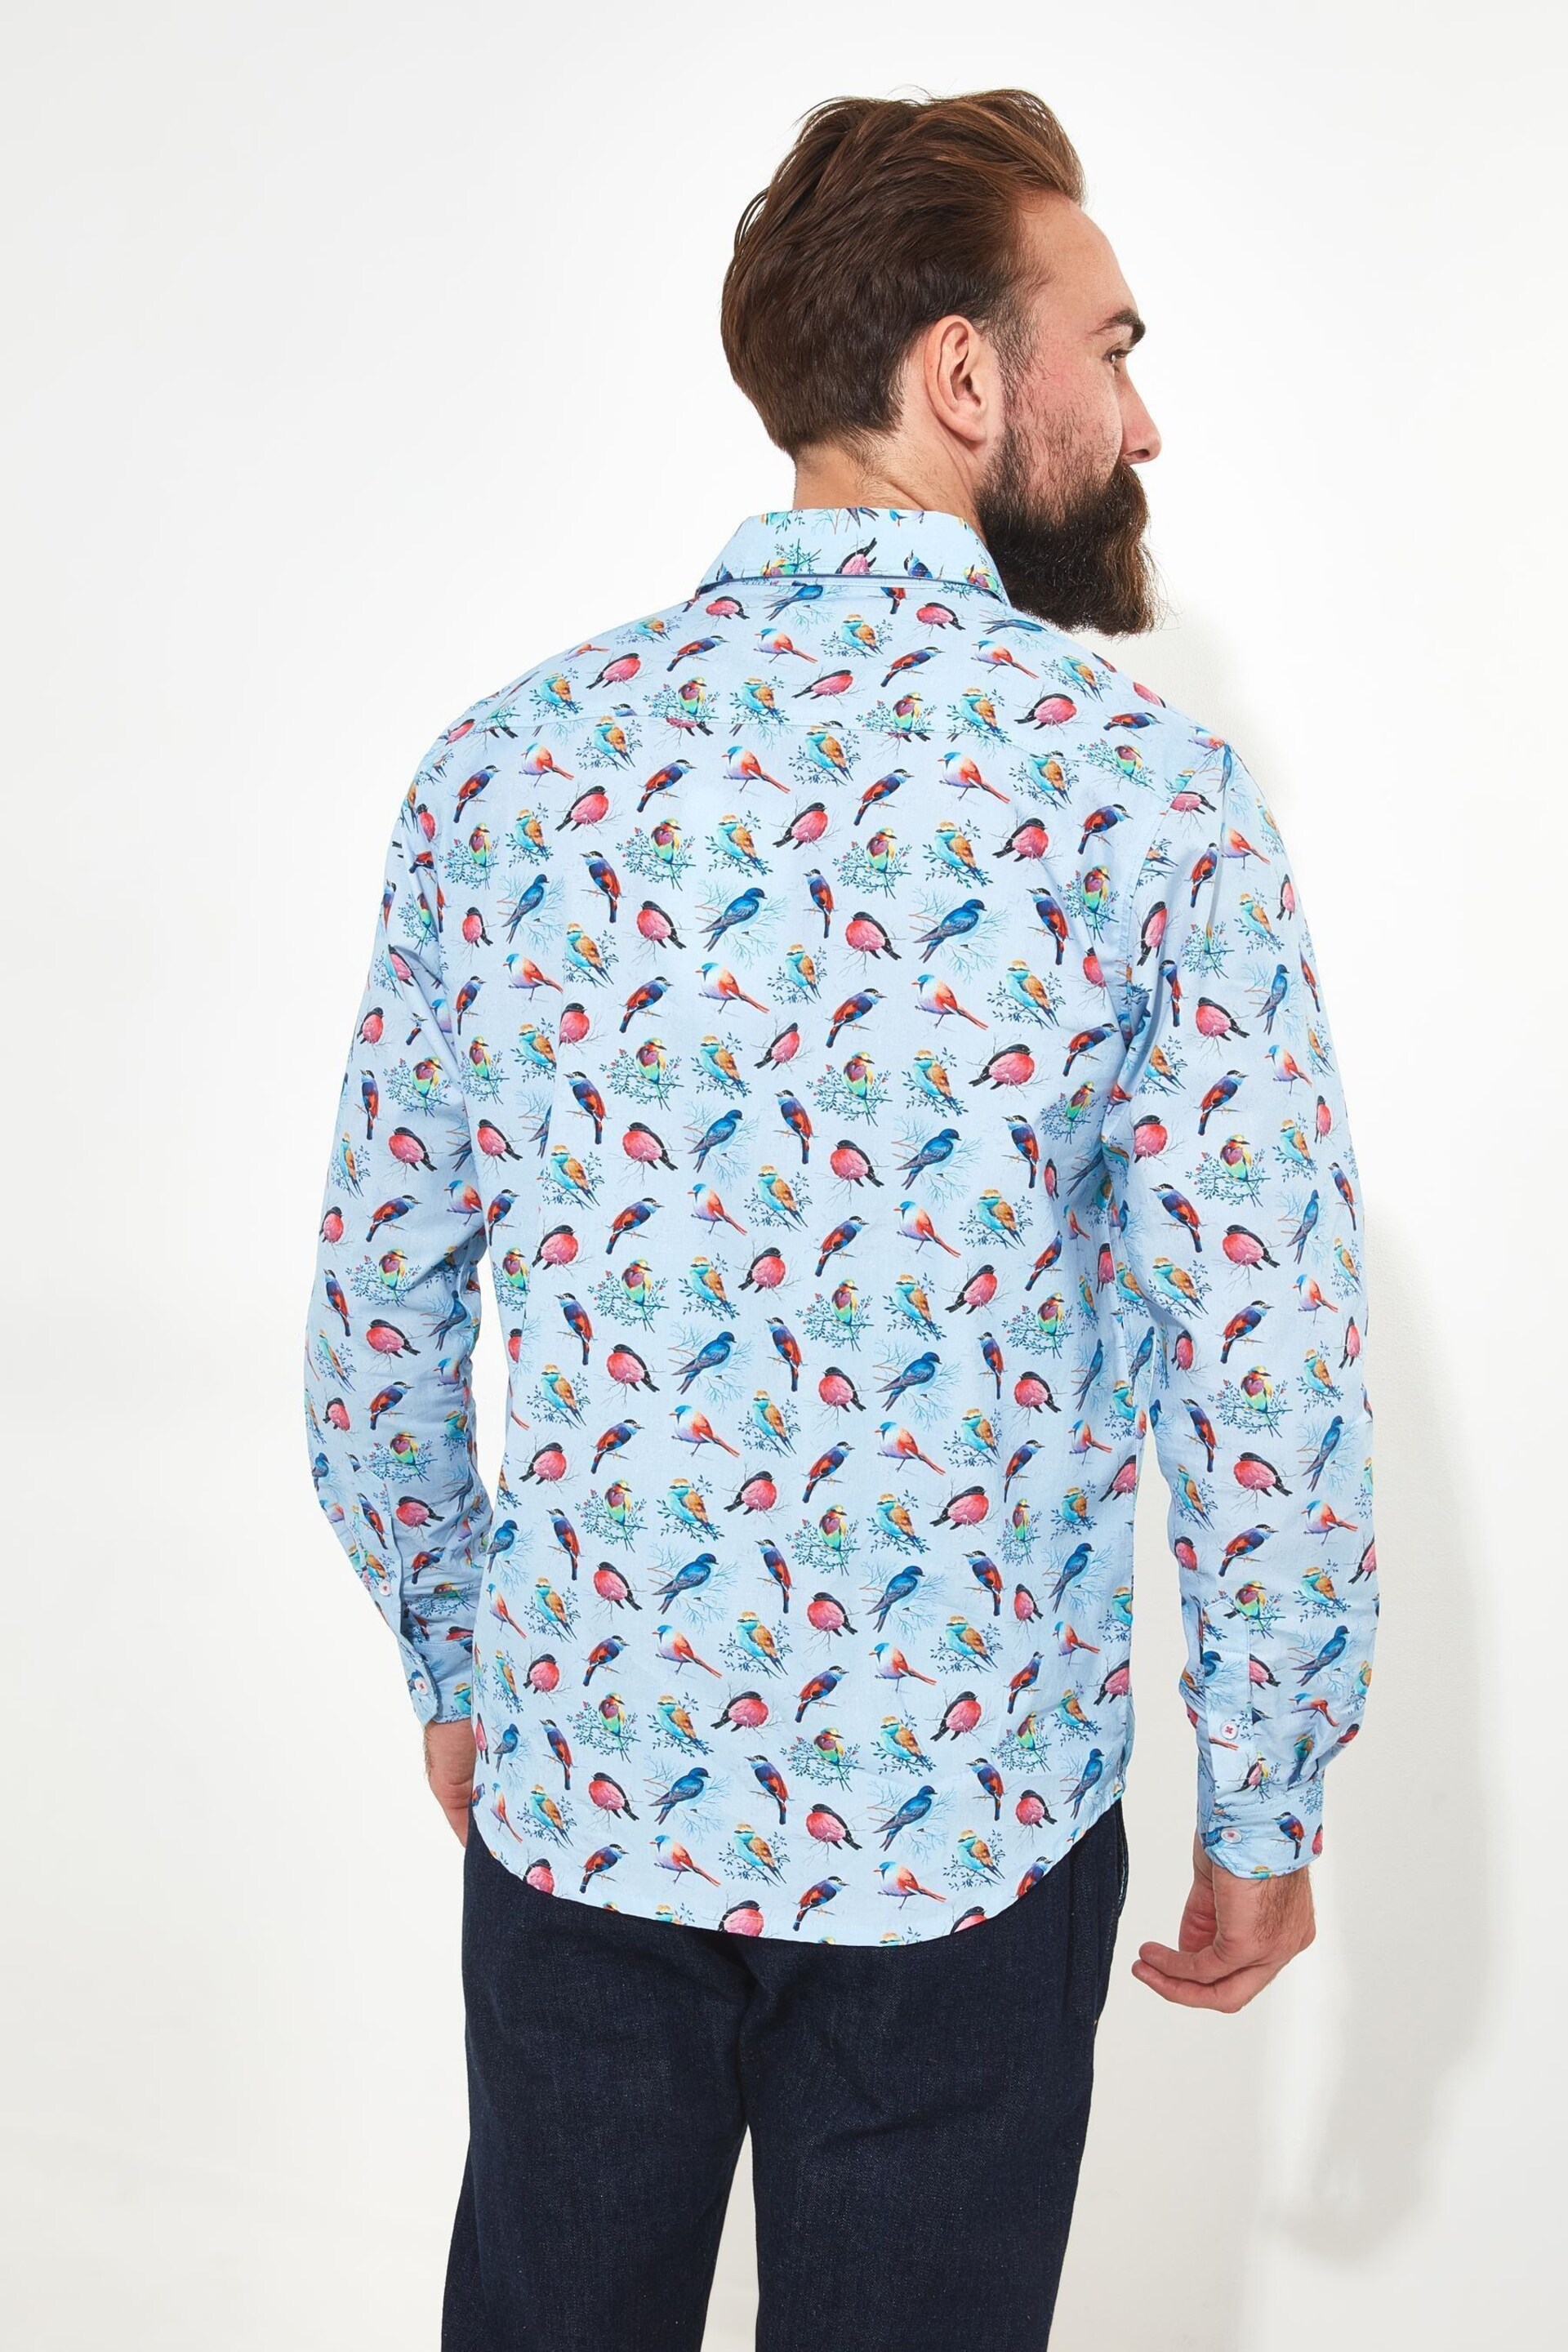 Joe Browns Blue Bird Print Long Sleeve Shirt - Image 2 of 5